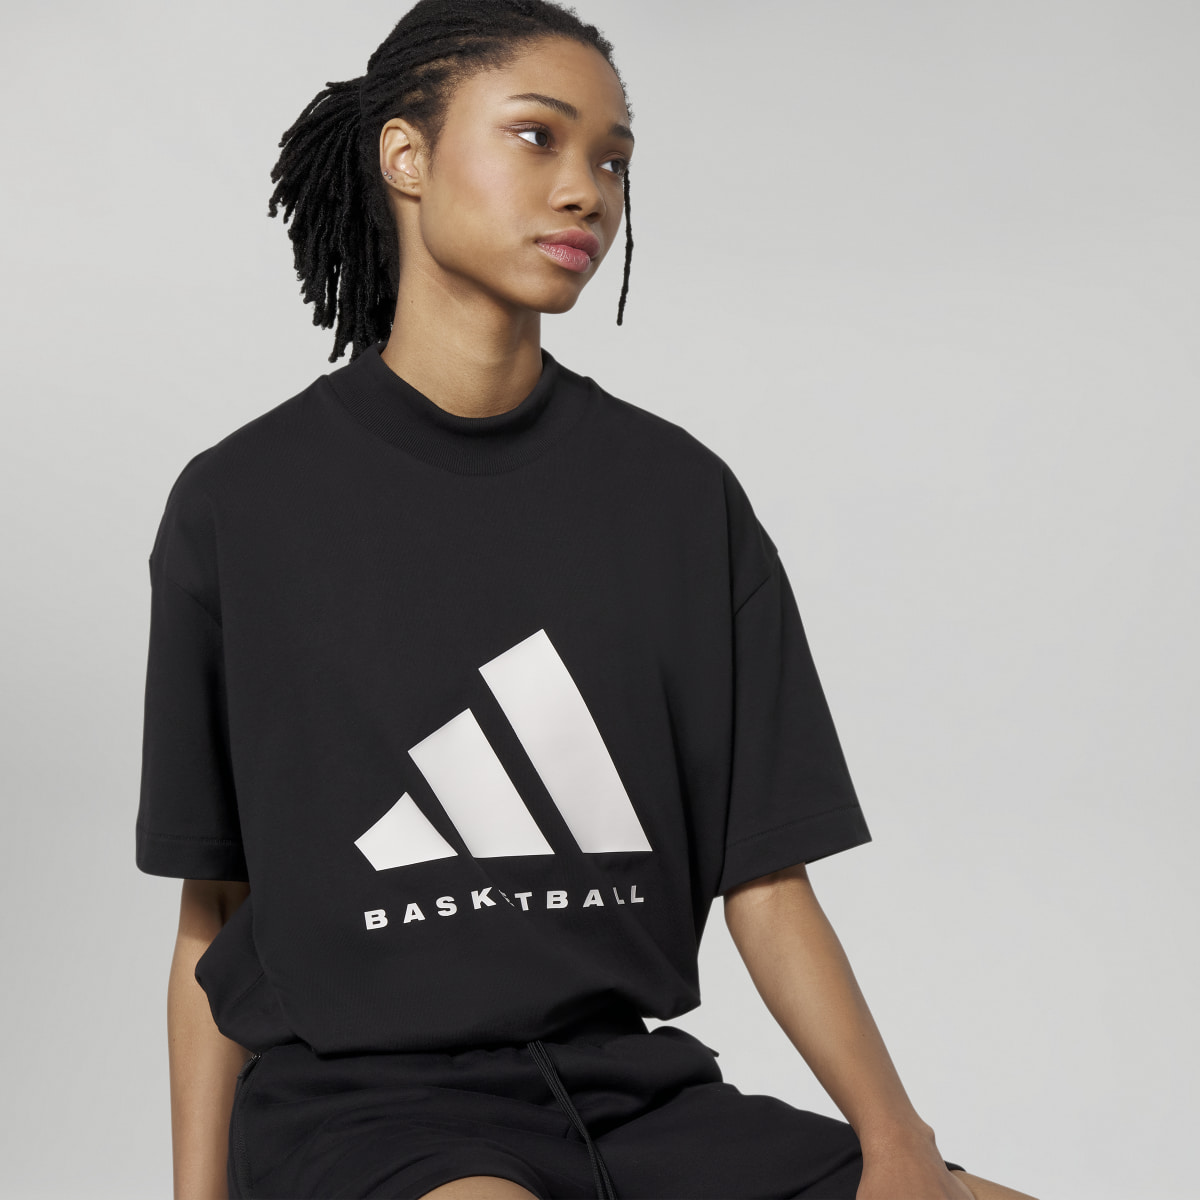 Adidas T-shirt 001 adidas Basketball. 5